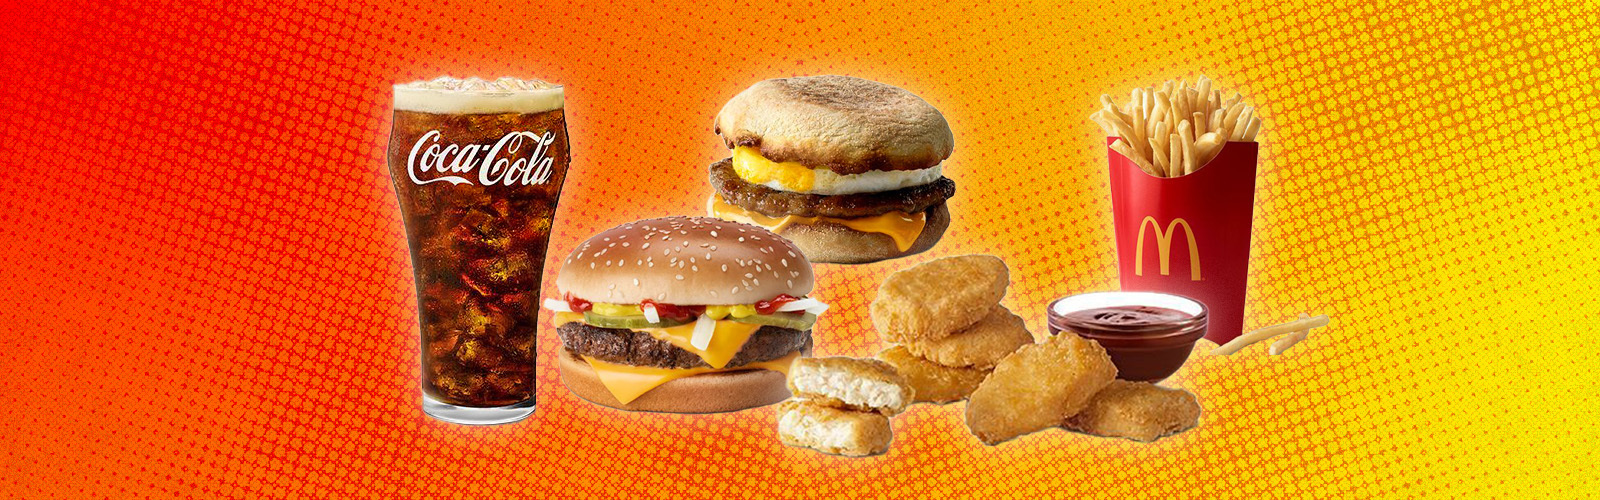 Five Best From McDonald's